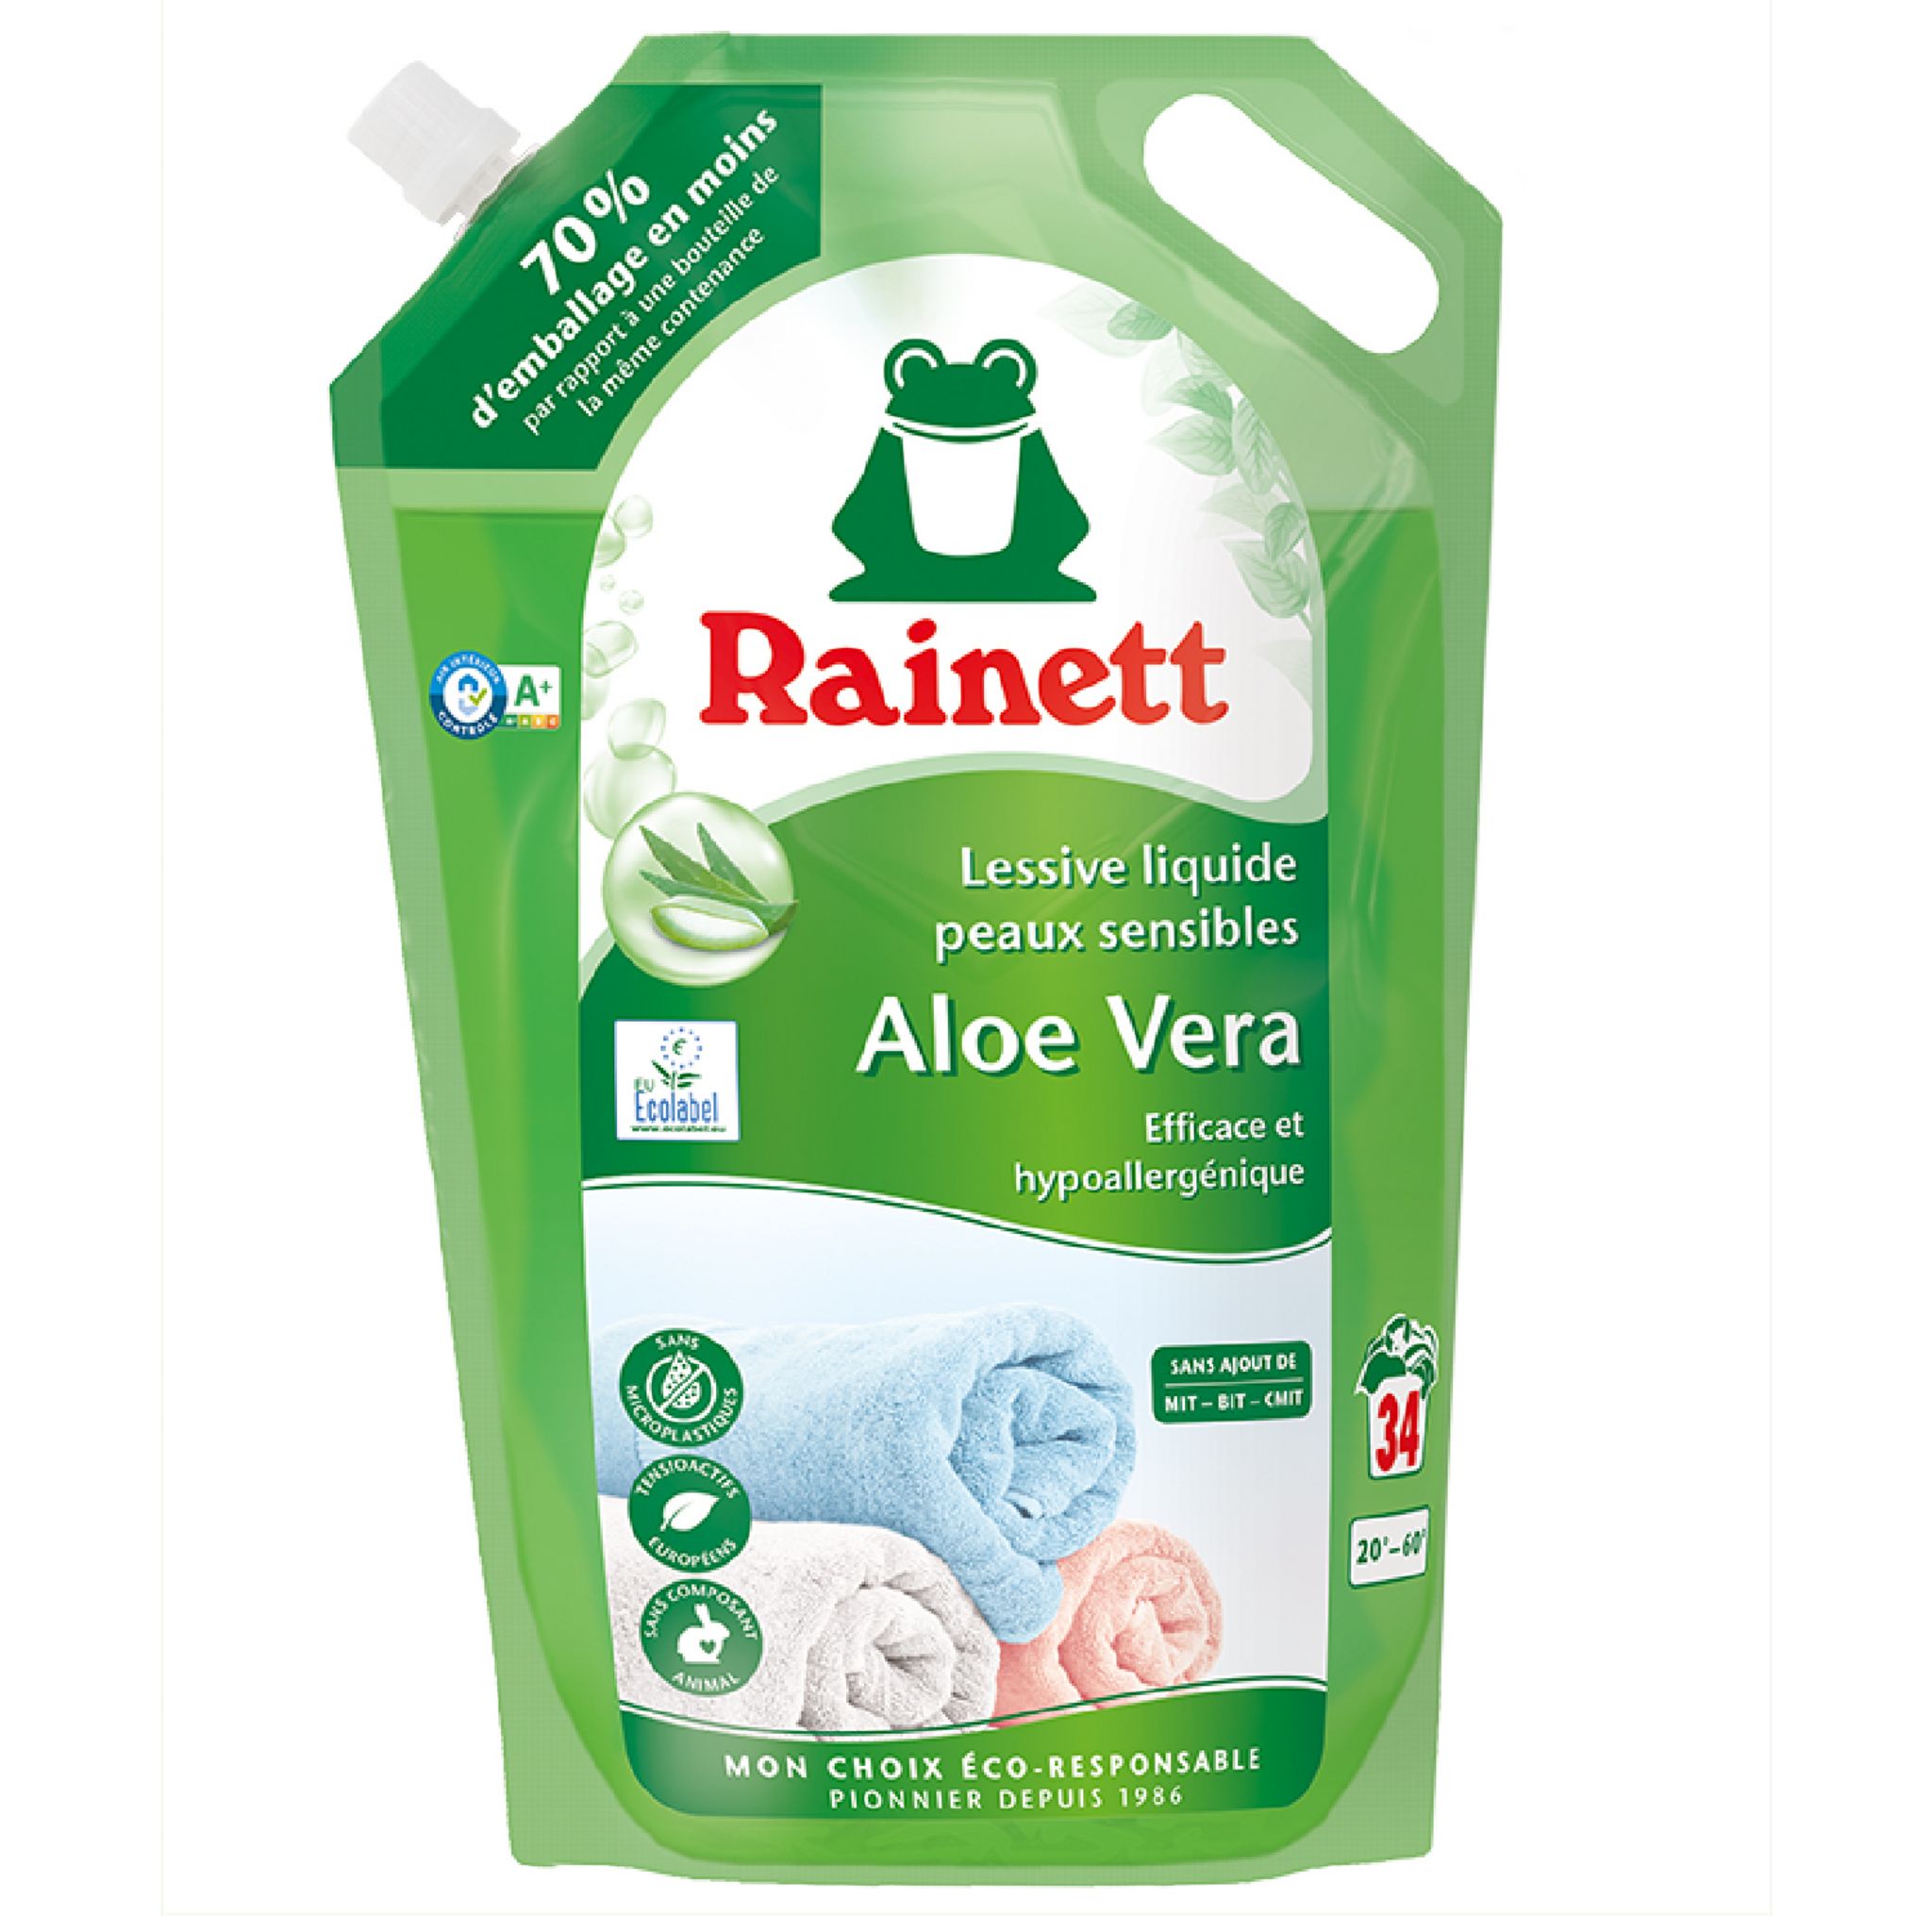 Rainett - kit lessive et vaisselle Aloe Vera - Cdiscount Au quotidien